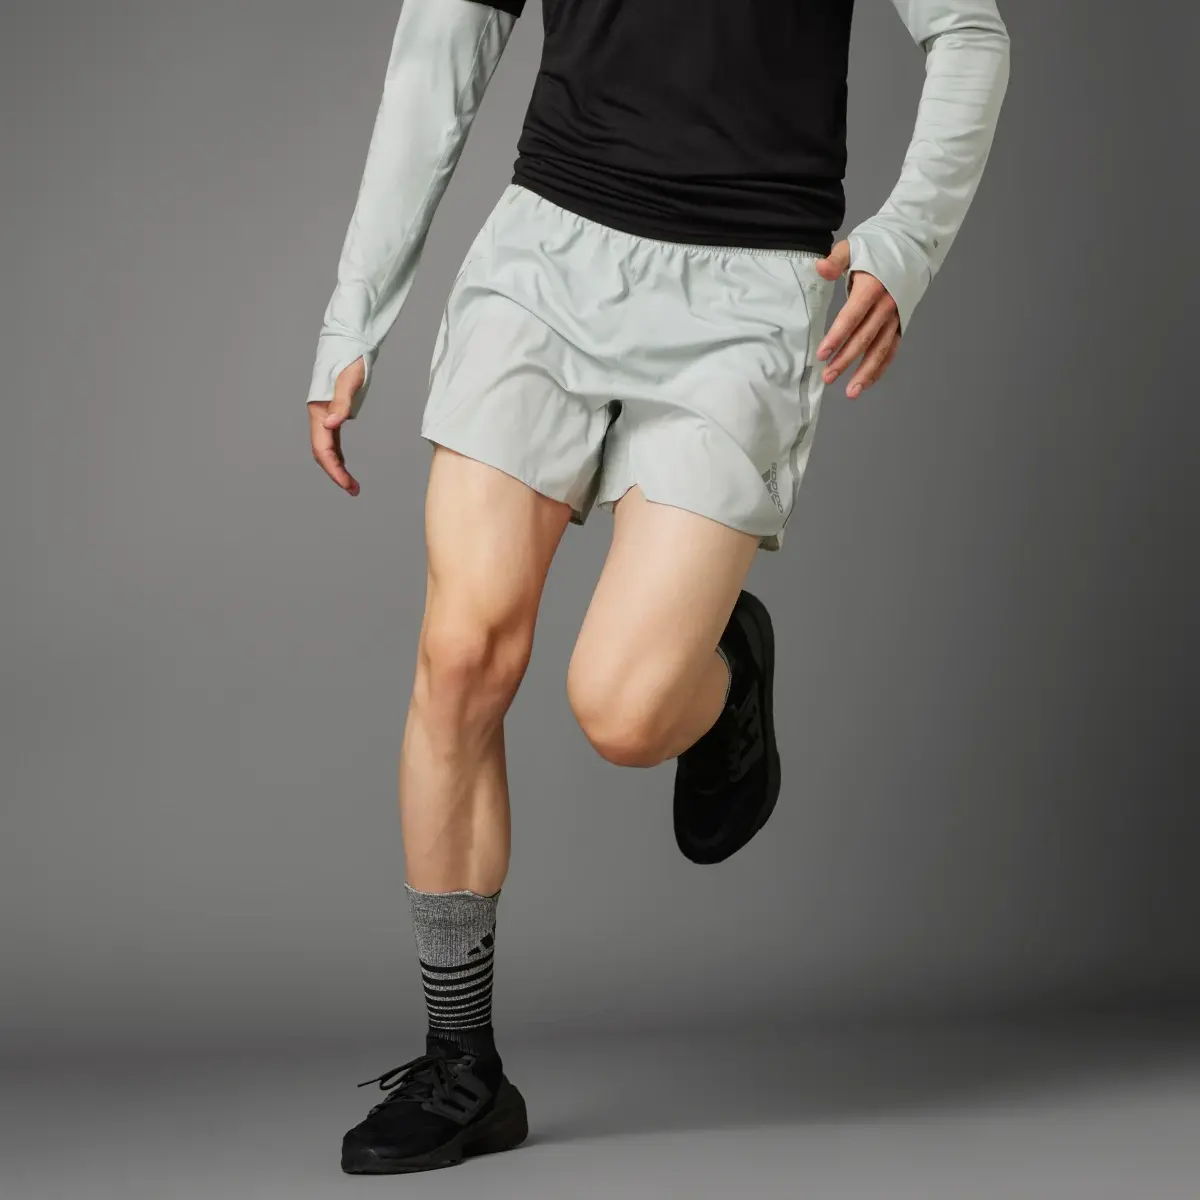 Adidas Designed 4 Running Shorts. 1